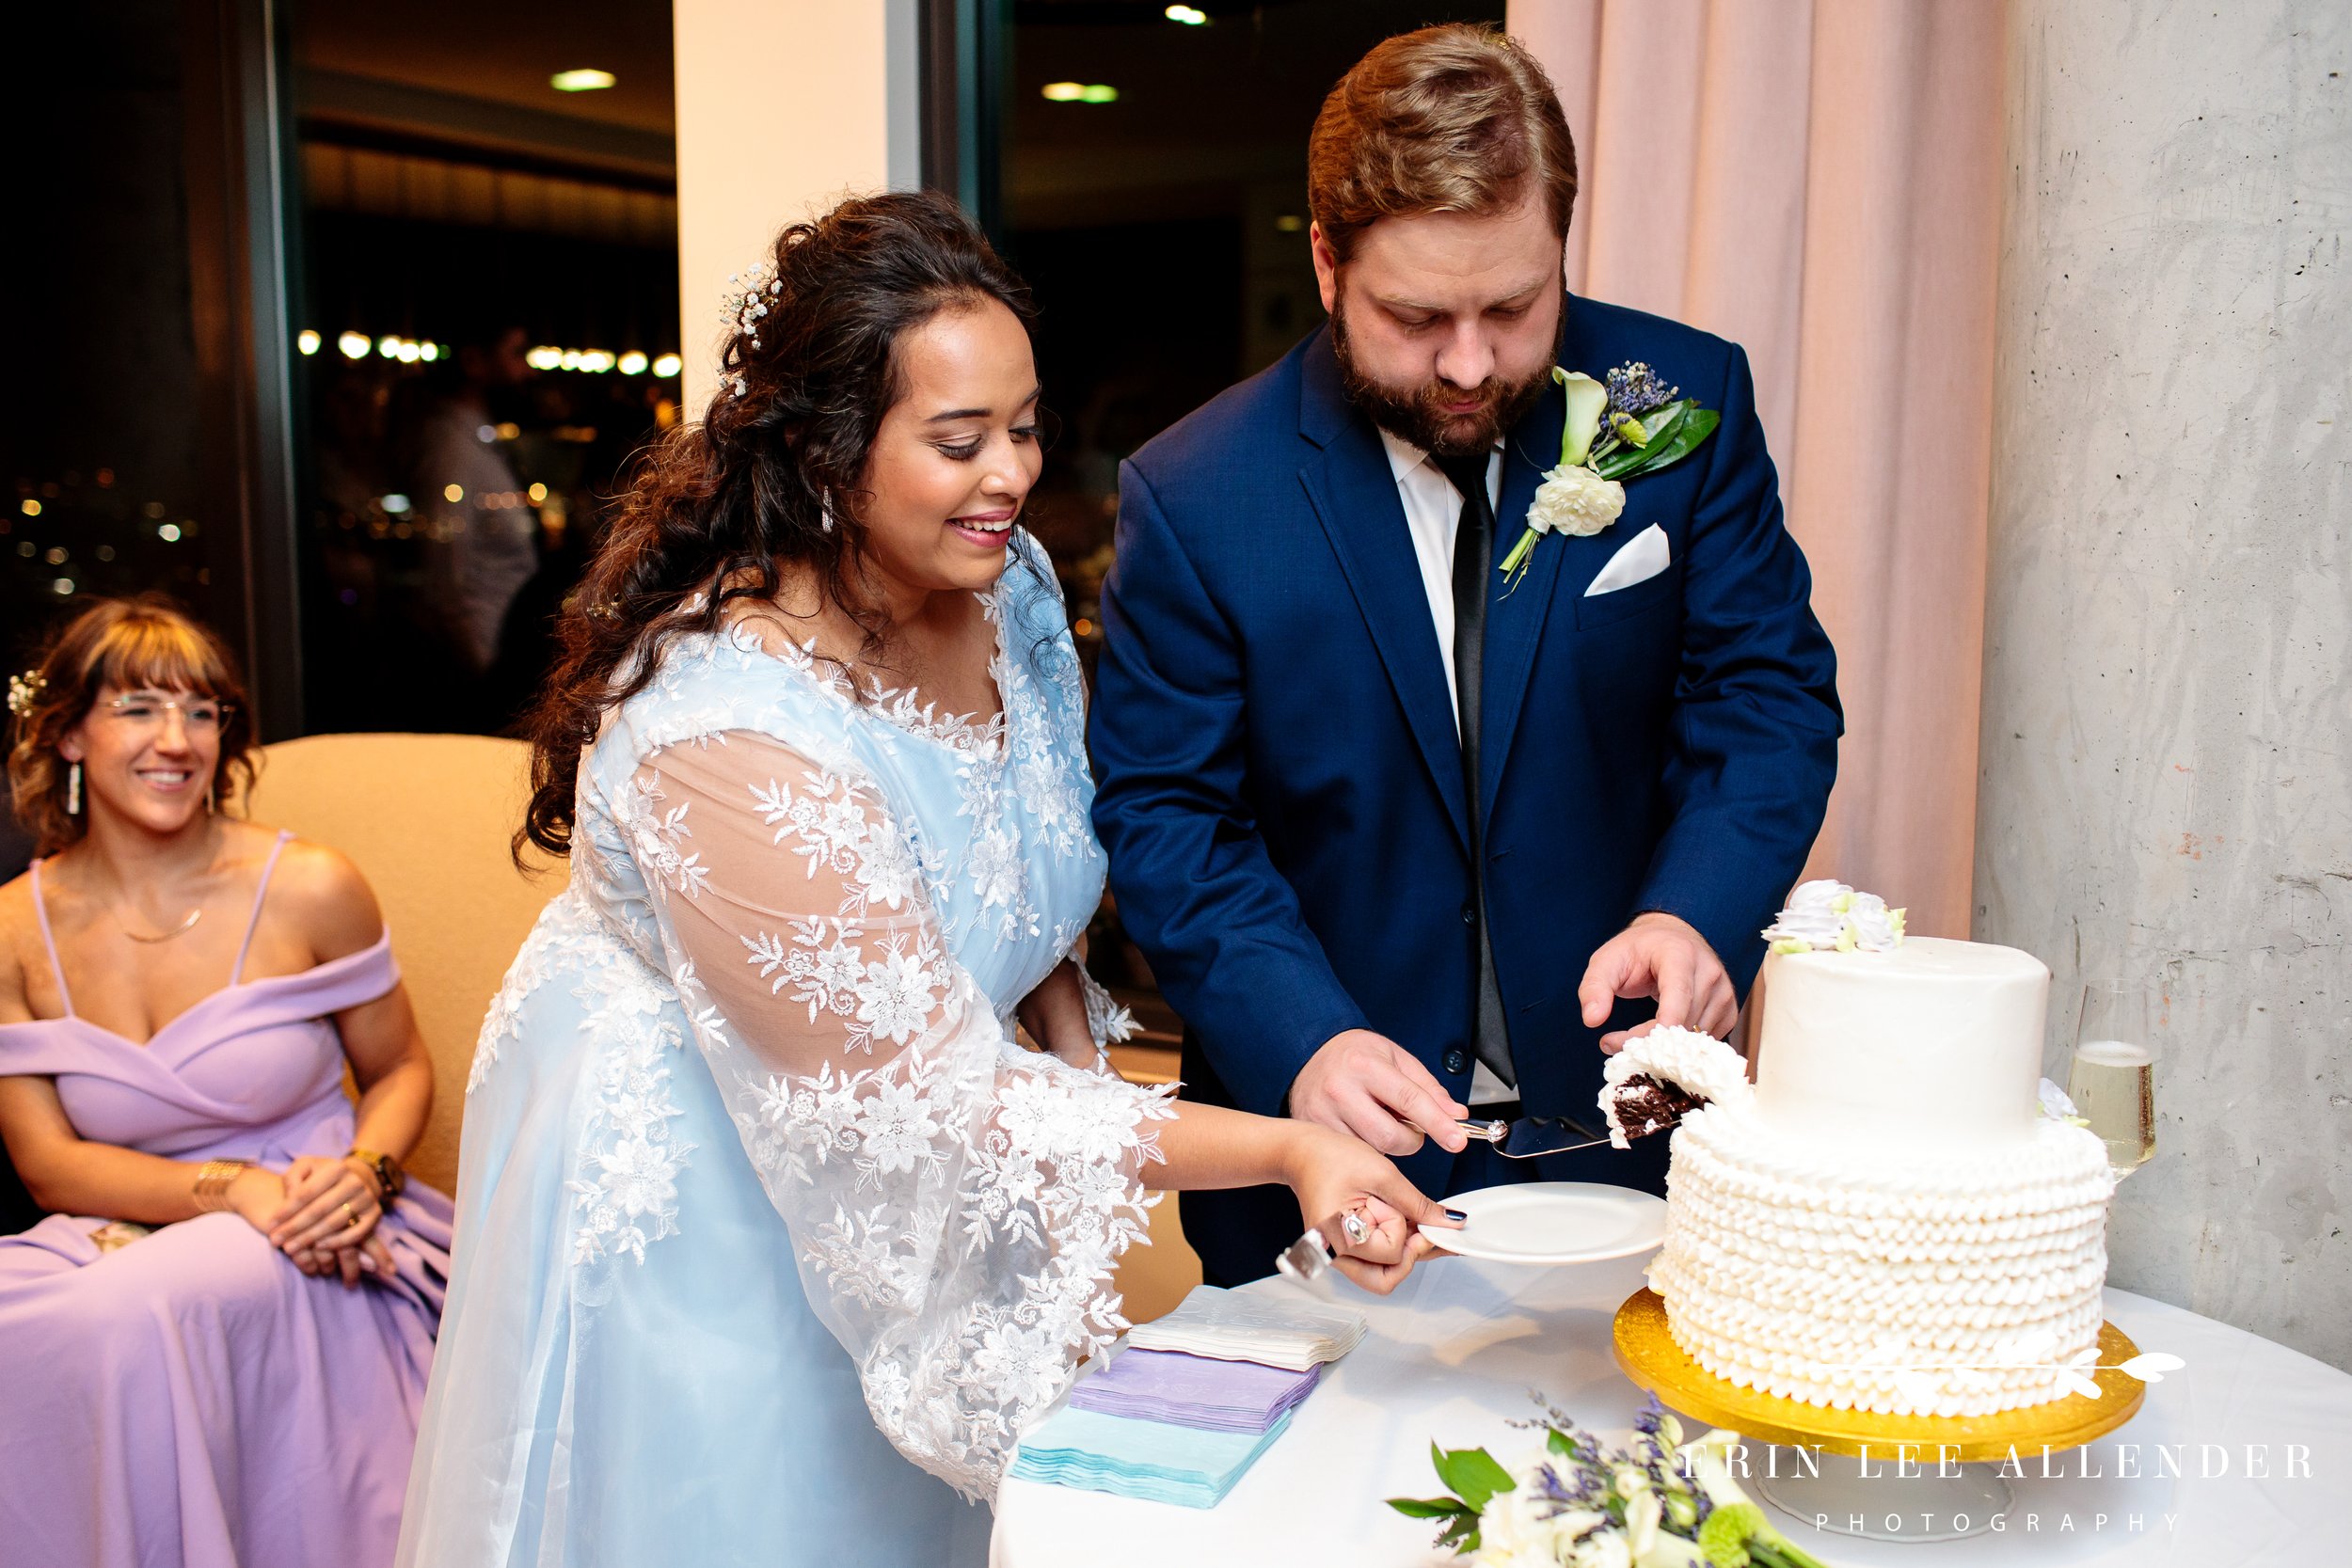 wedding-cake-cutting